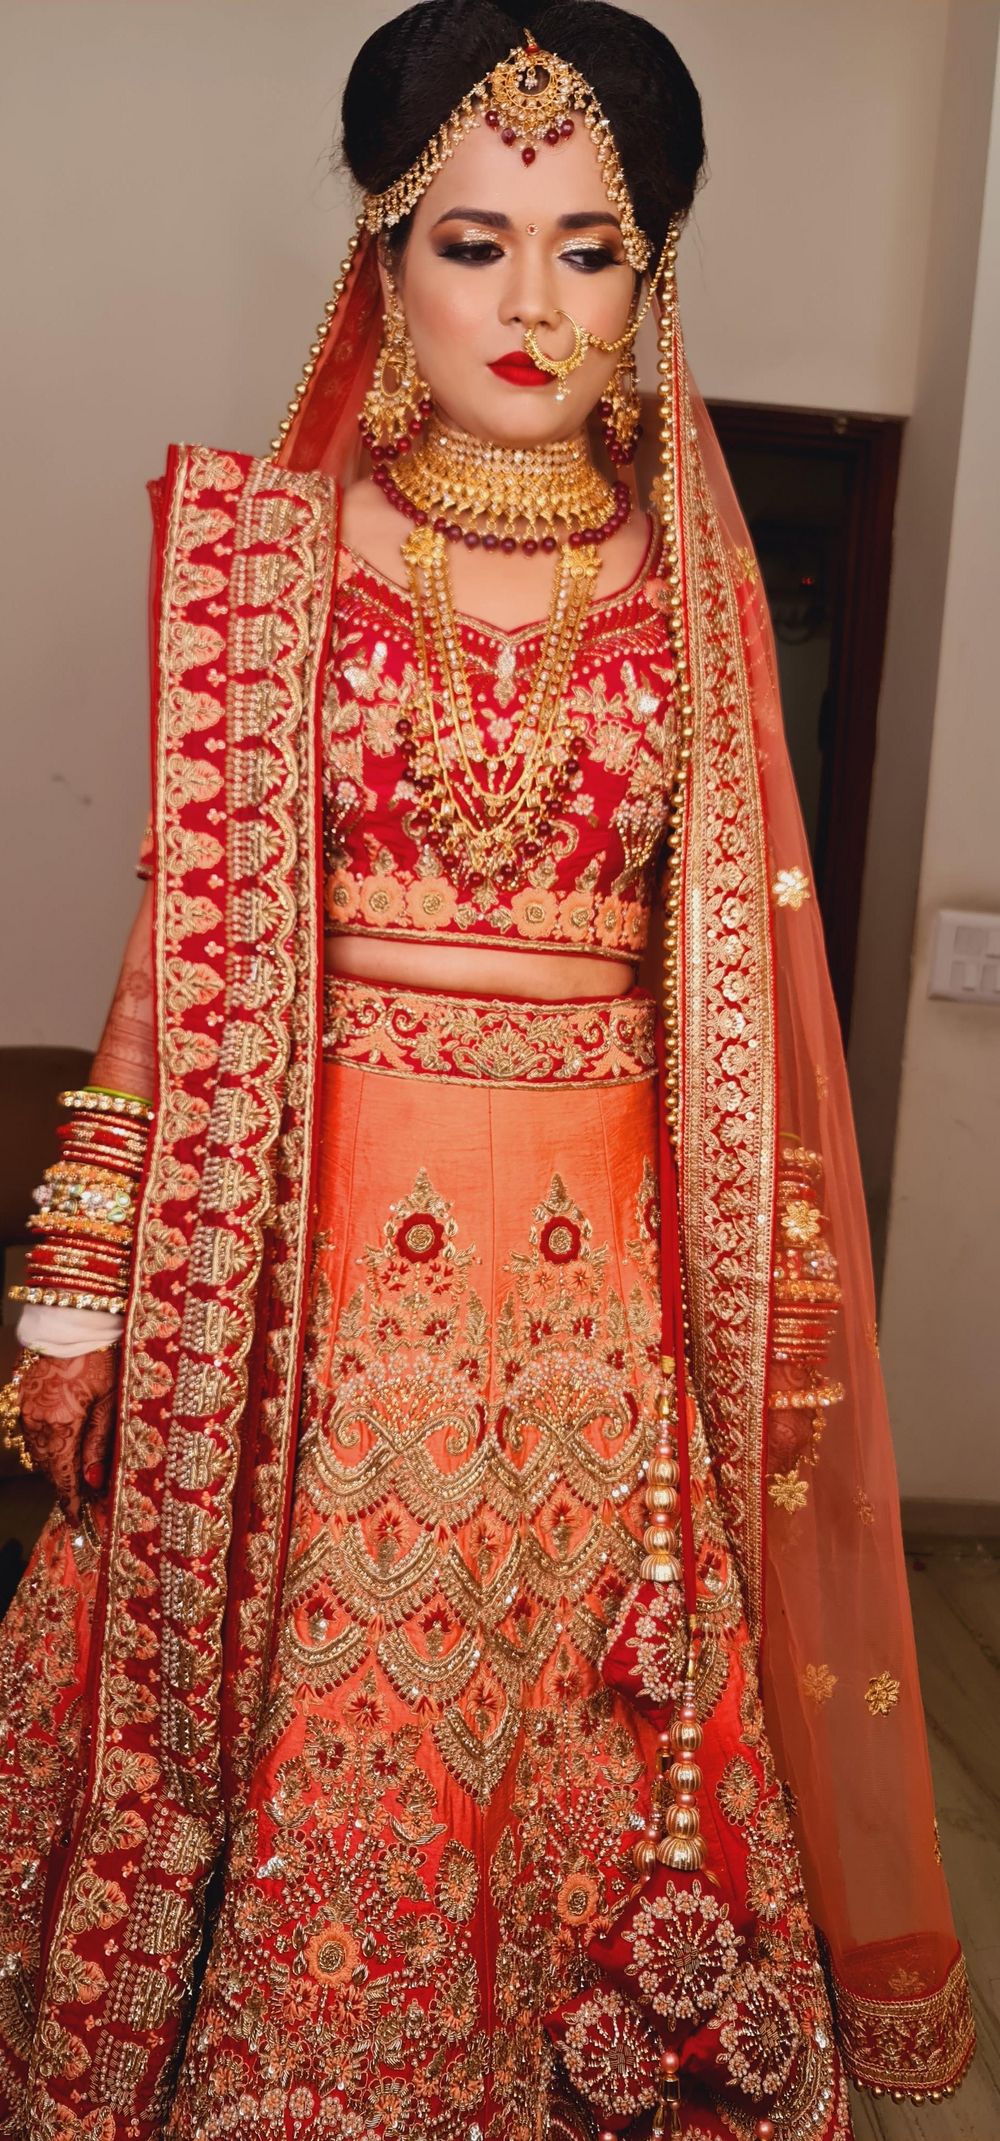 Photo From Gurgaon Bride - By Contourz by Taruna Manchanda 